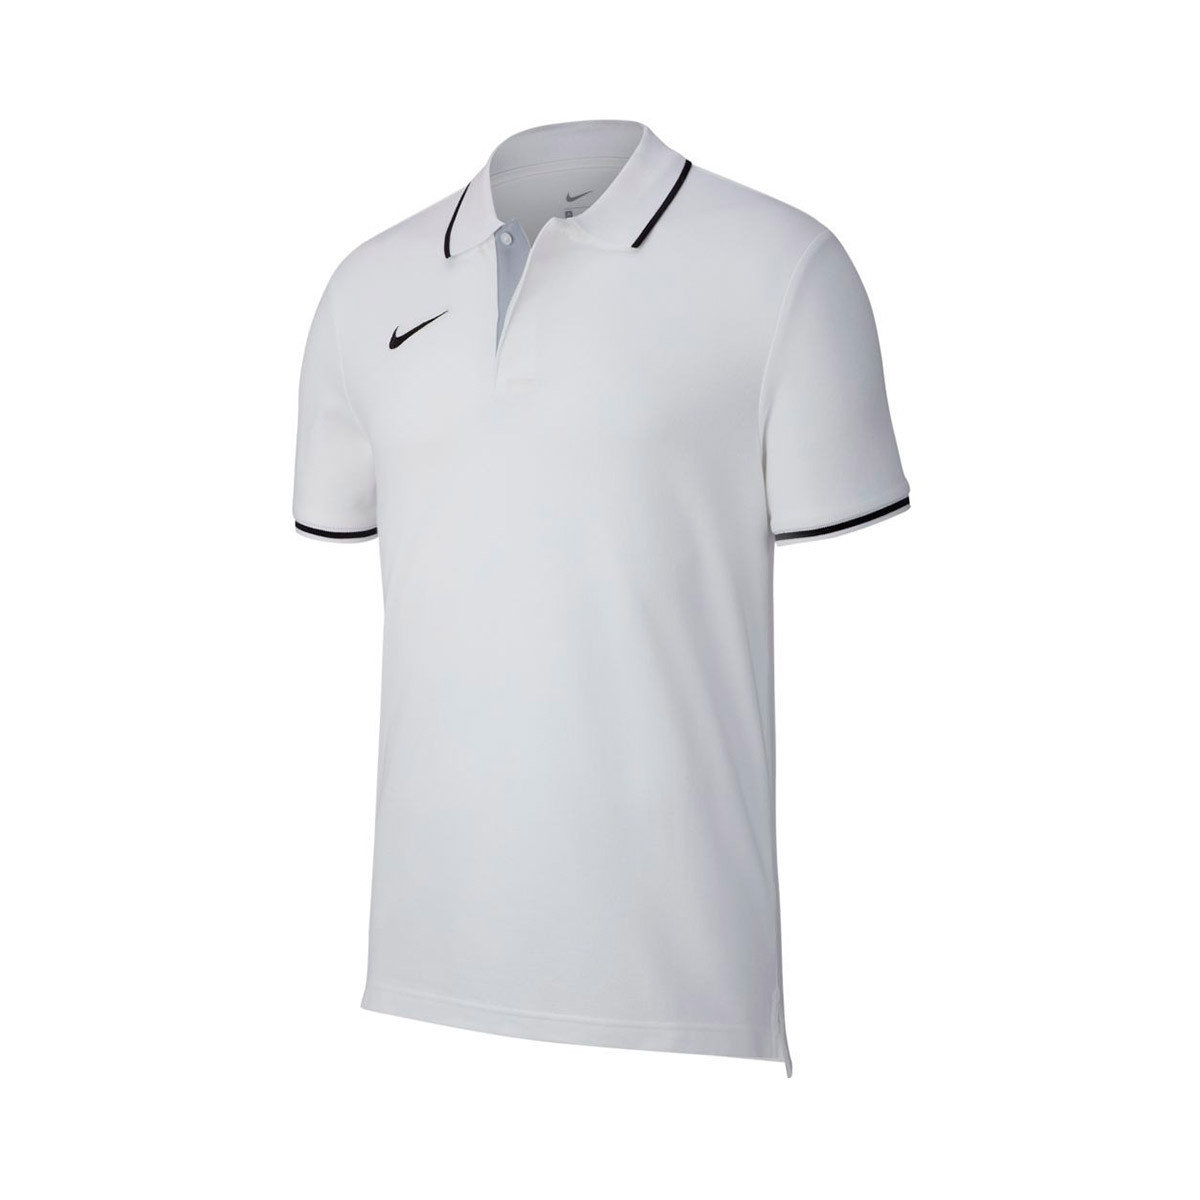 Polo Nike Club 19 m/c White-Black - Negozio di calcio Fútbol Emotion